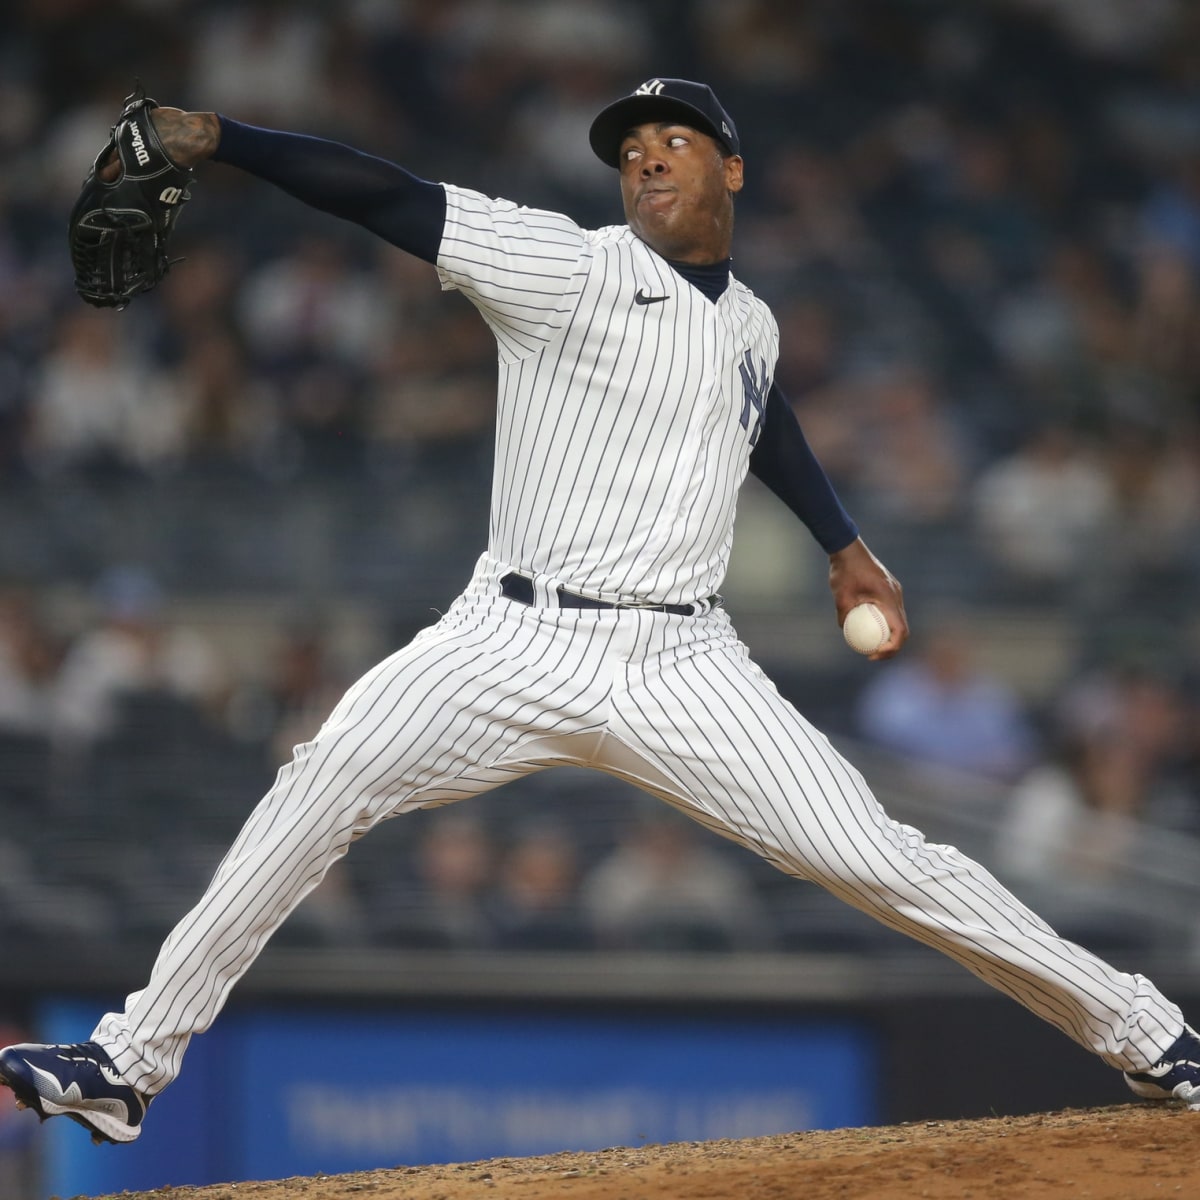 New York Yankees closer Aroldis Chapman has elbow injury - Sports  Illustrated NY Yankees News, Analysis and More